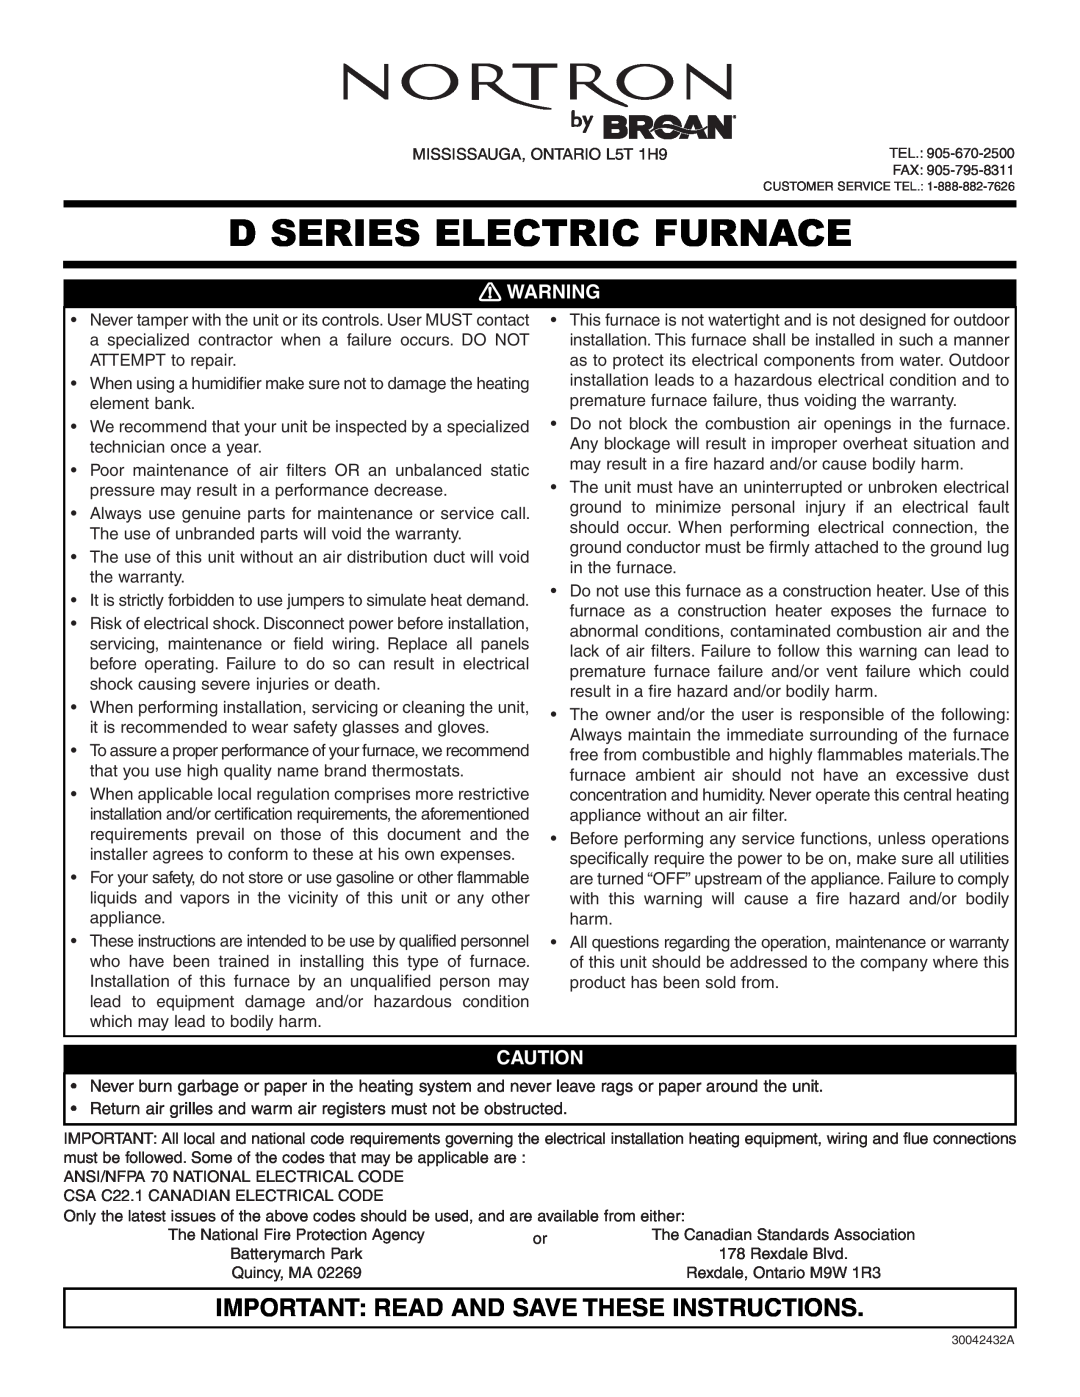 Broan D SERIES ELECTRIC FURNACE, 30042432A warranty D Series Electric Furnace, Important Read And Save These Instructions 